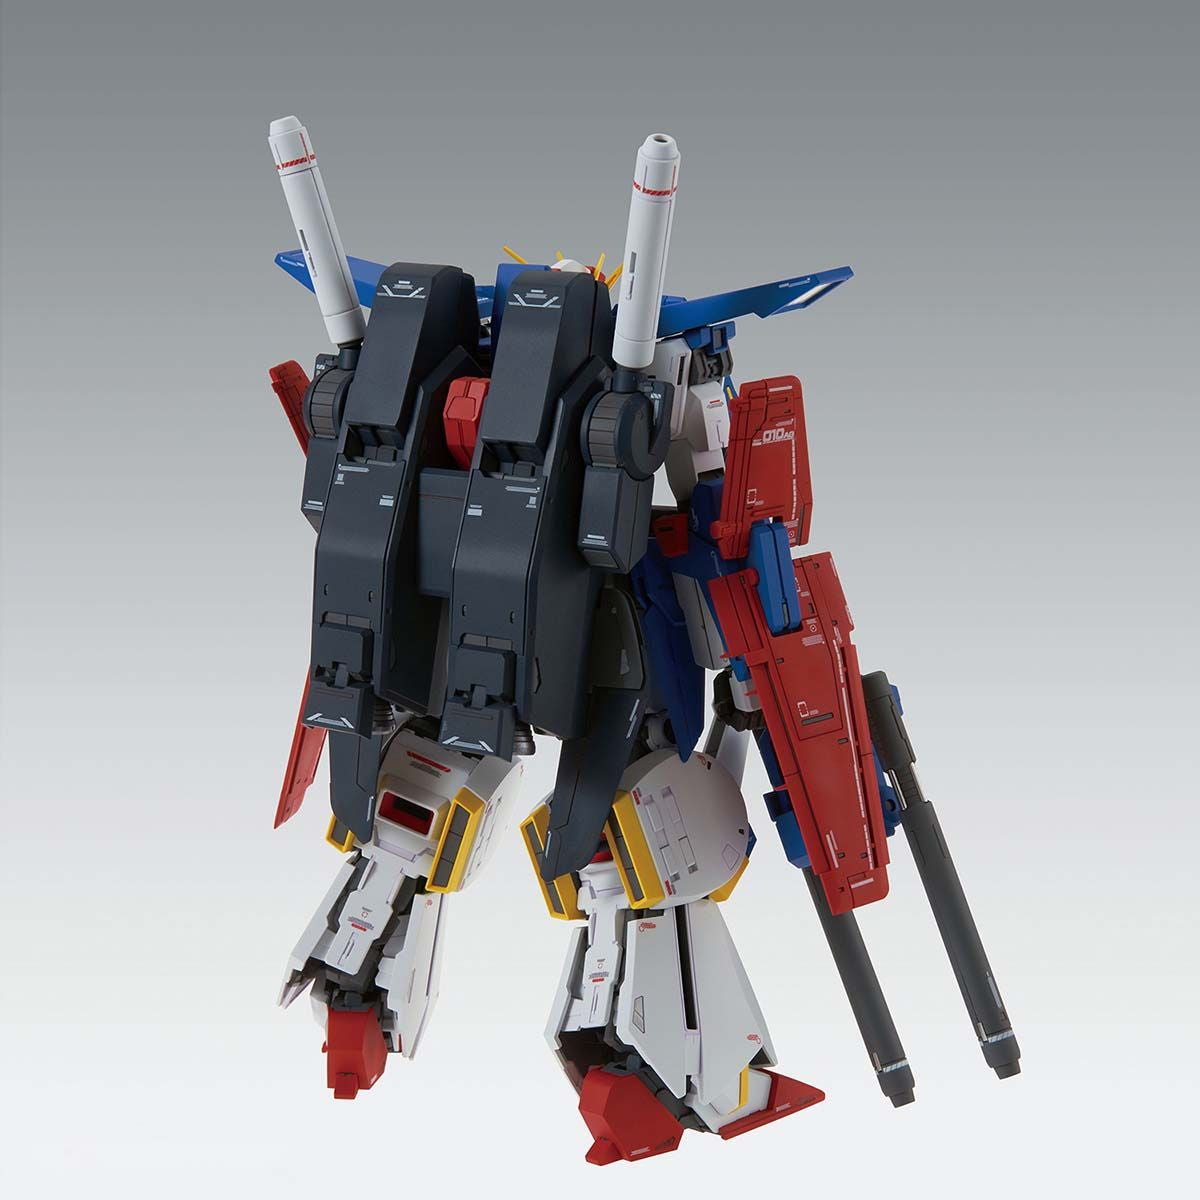 Bandai 1/100 MG MSZ-010 ZZ Gundam Ver.Ka Plastic Model Kit